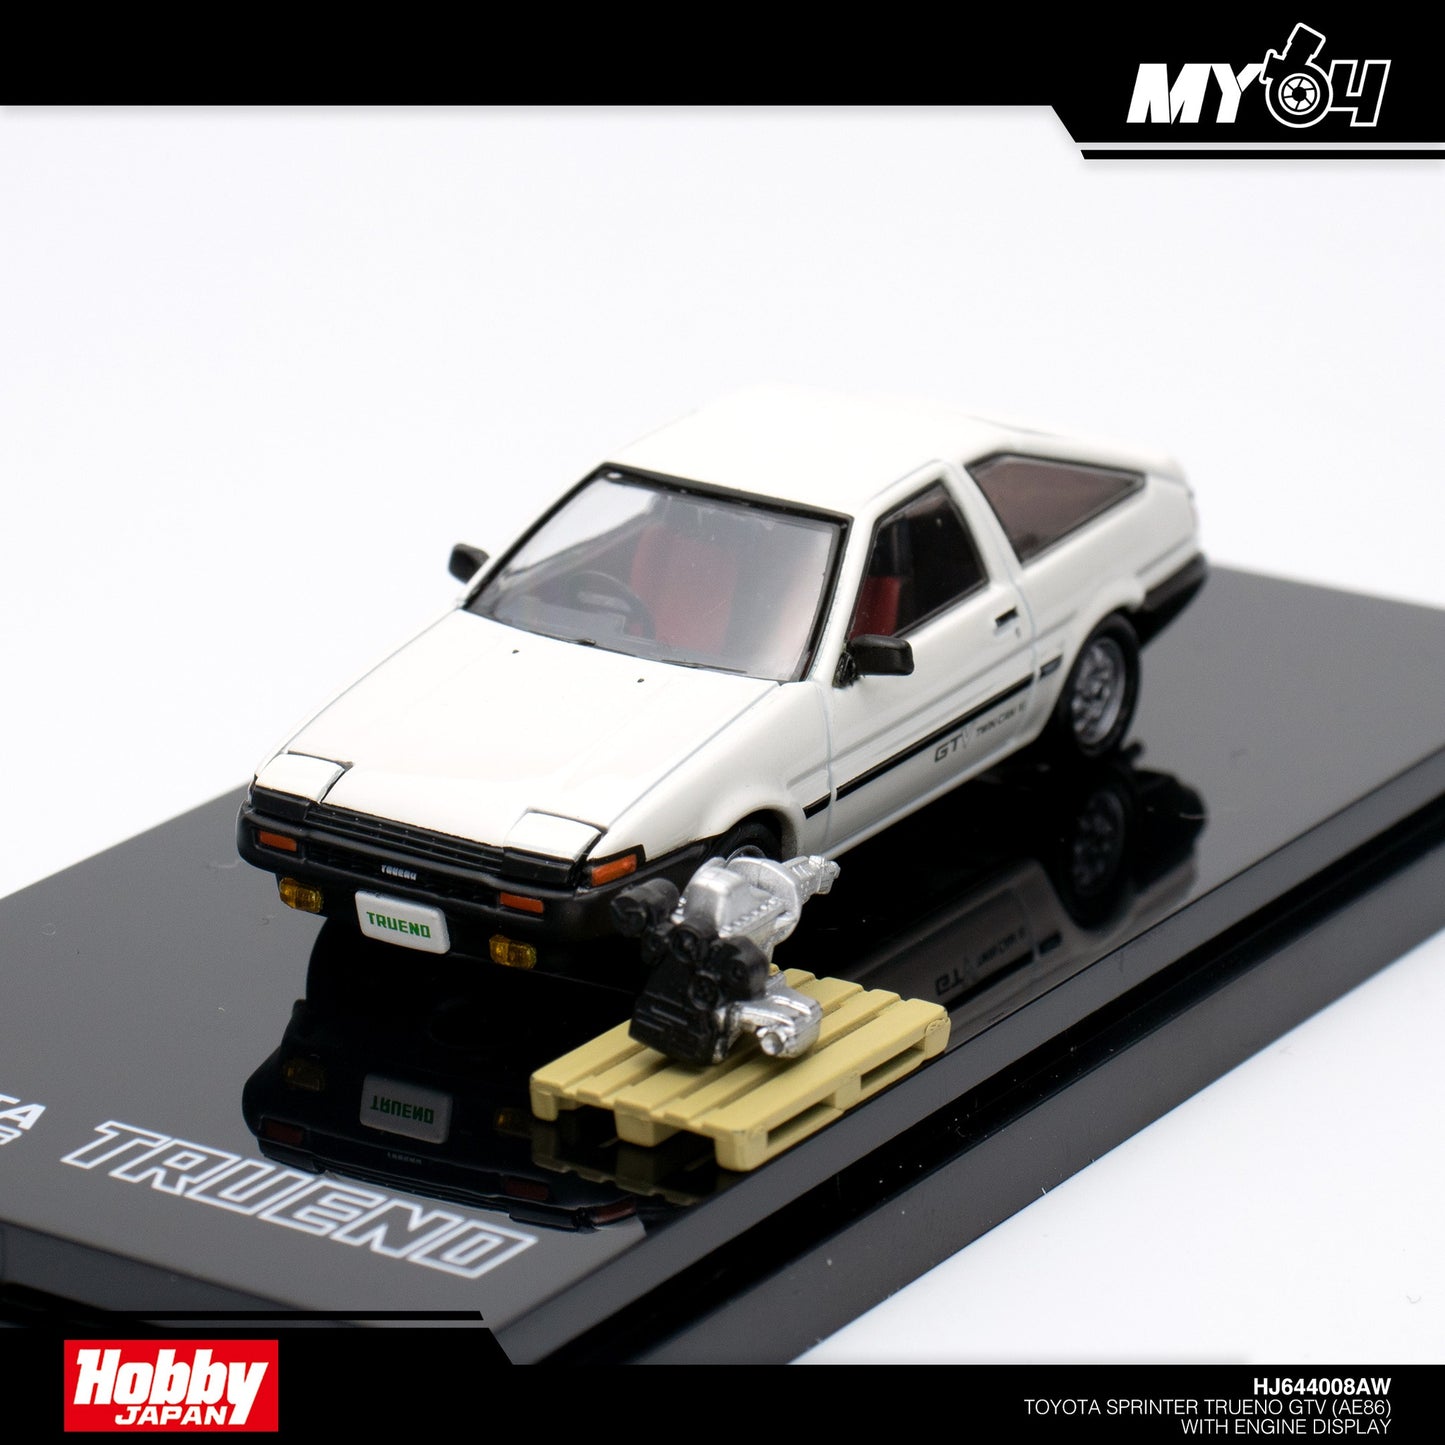 [Hobby Japan] Toyota Sprinter Trueno GTV (AE86) with Engine Display - White